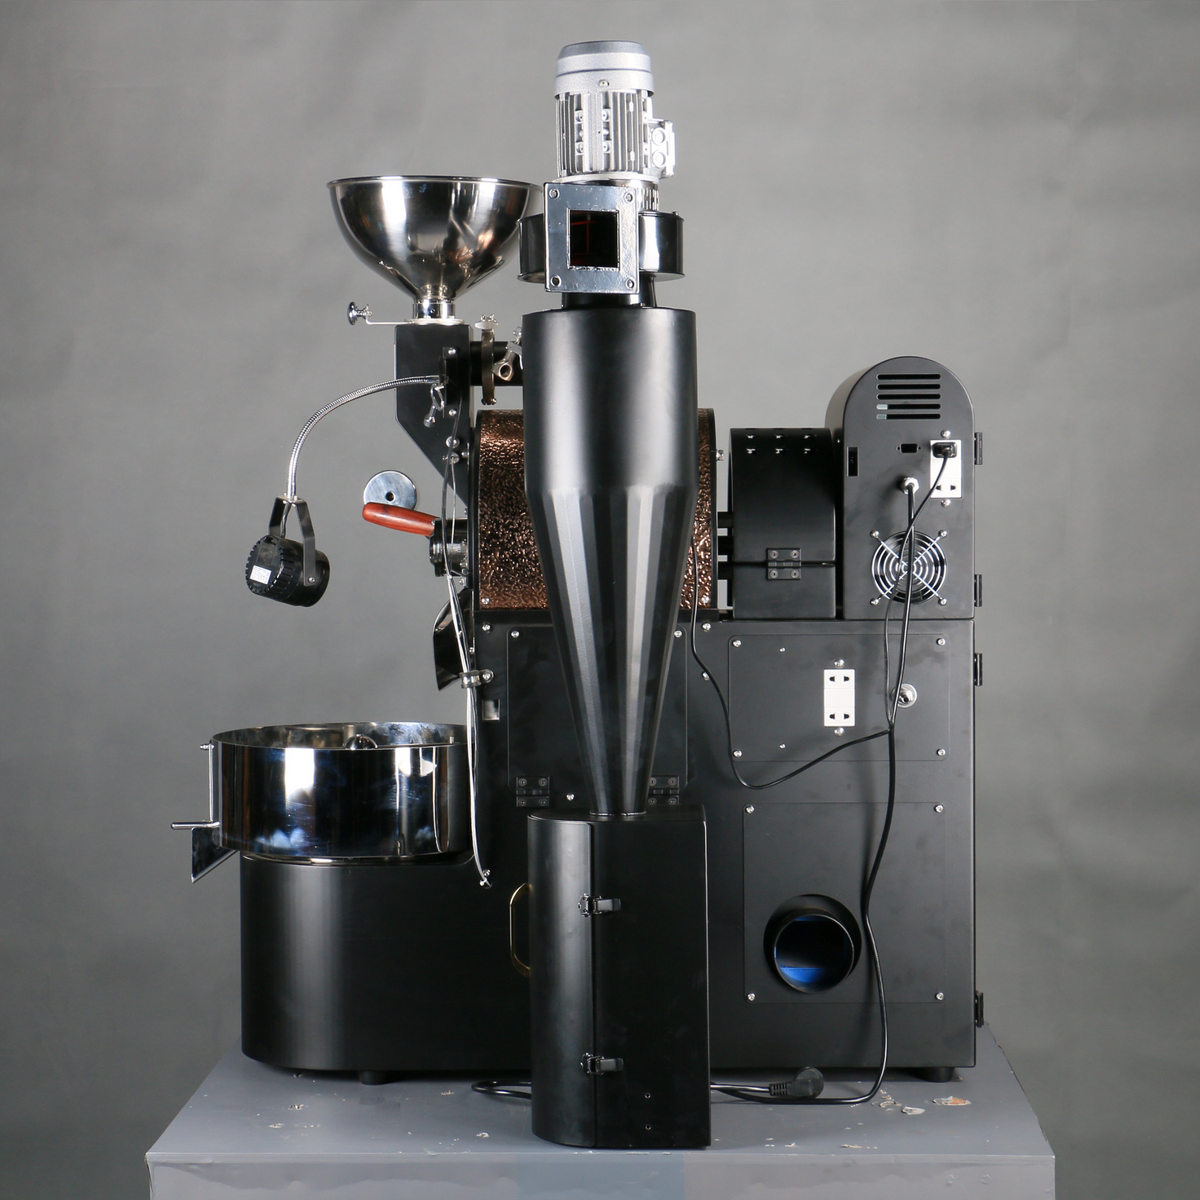 Santoker R3 手动咖啡烘焙机 - 3公斤/批